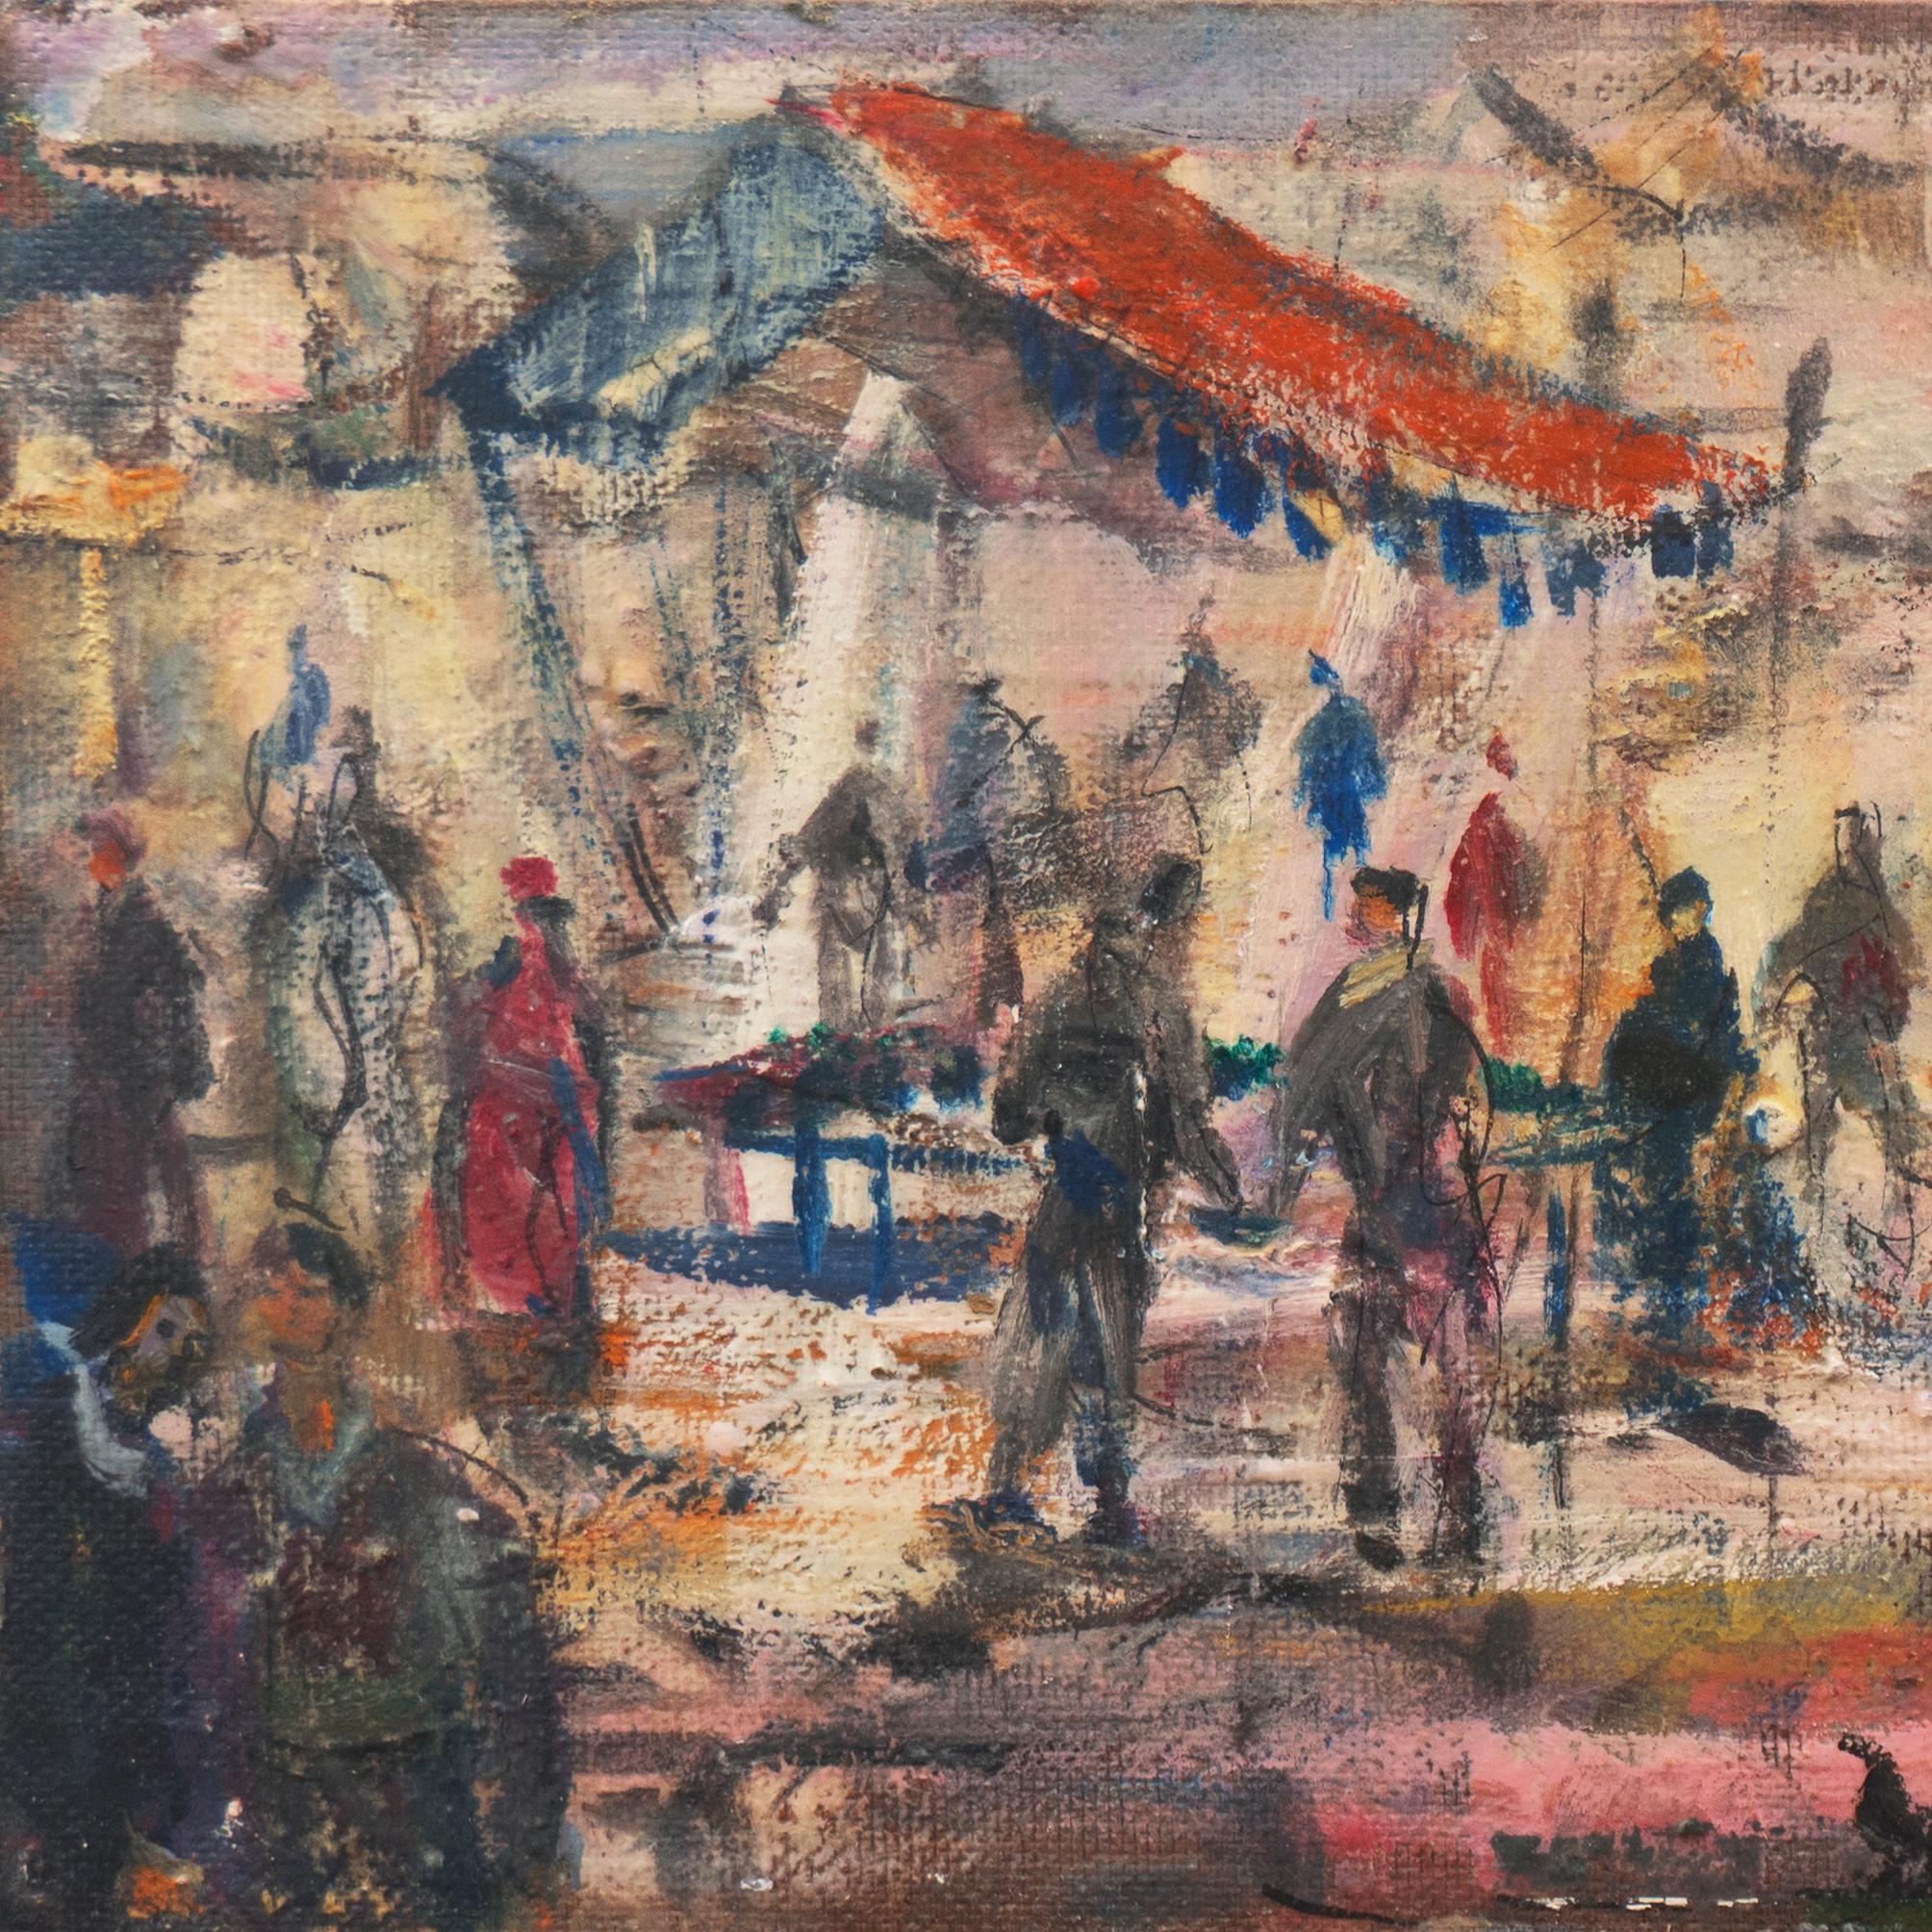 « Market Scene », Sausalito, North Beach, San Francisco Bay Area Expressionist Oil - Post-impressionnisme Painting par Pascal Cucaro